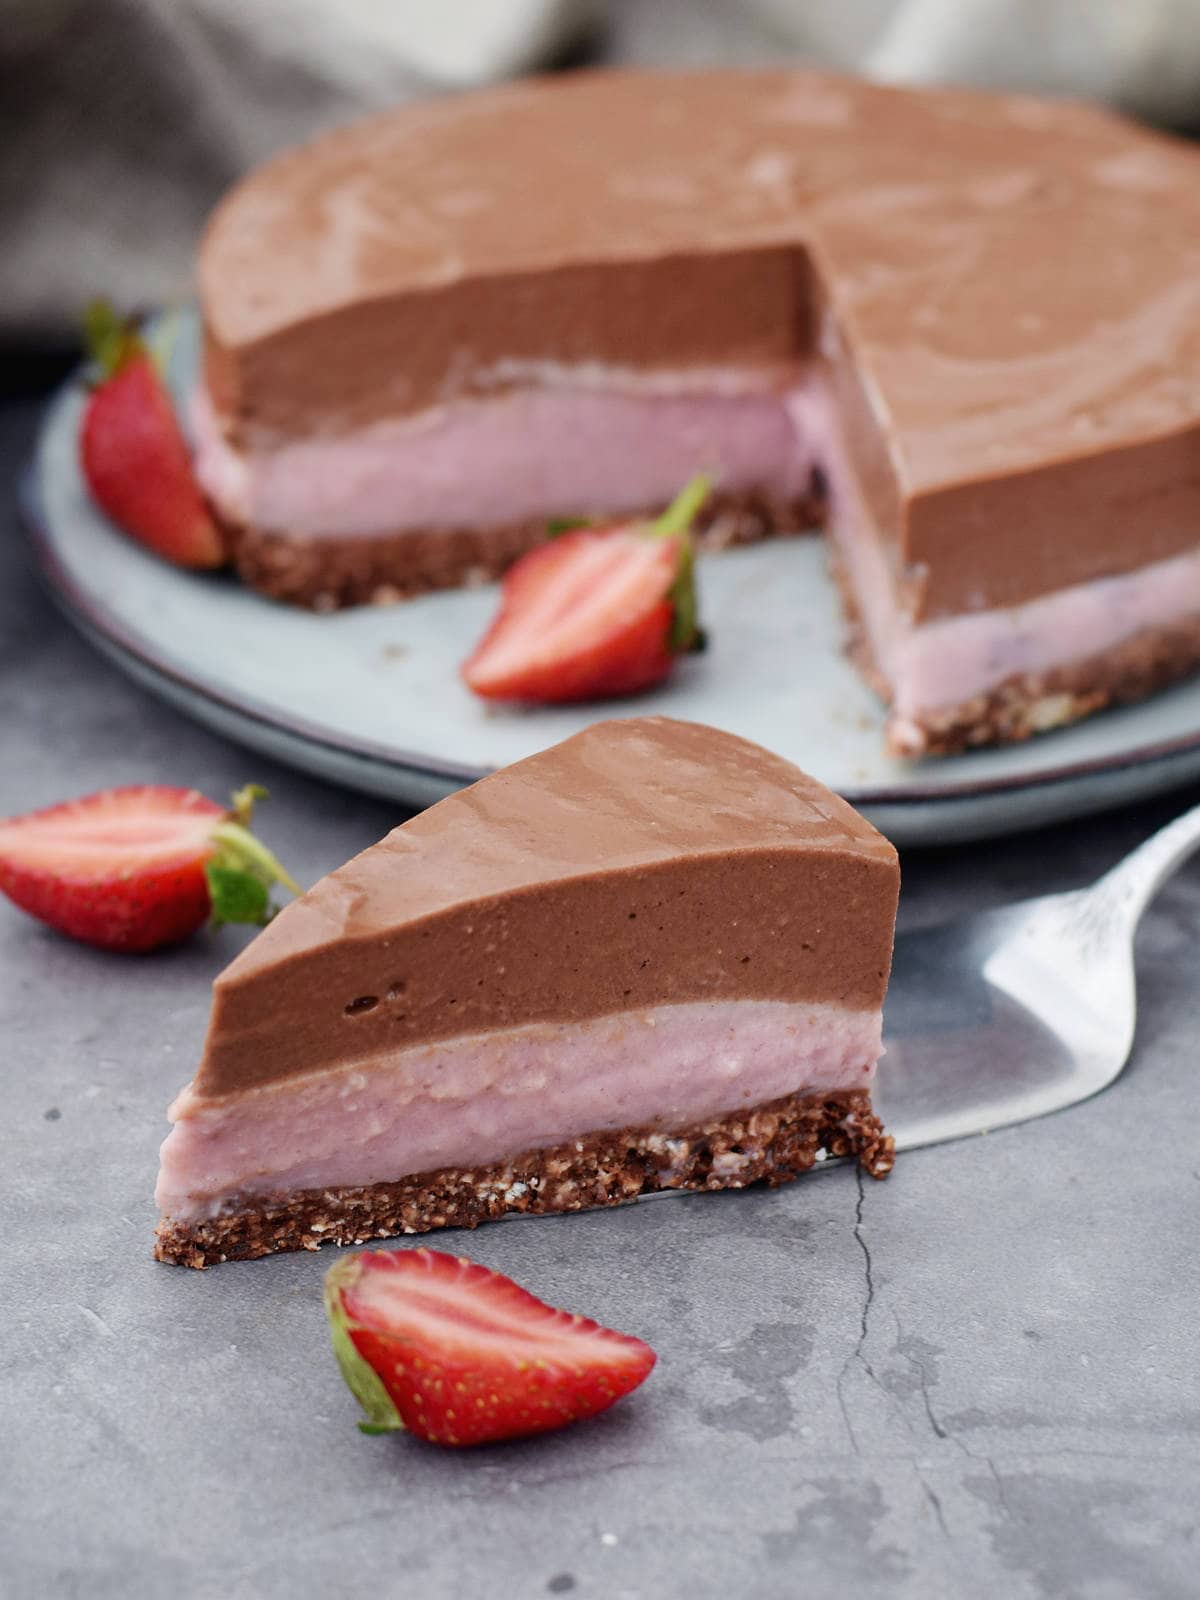 one piece of chocolate strawberry cheesecake